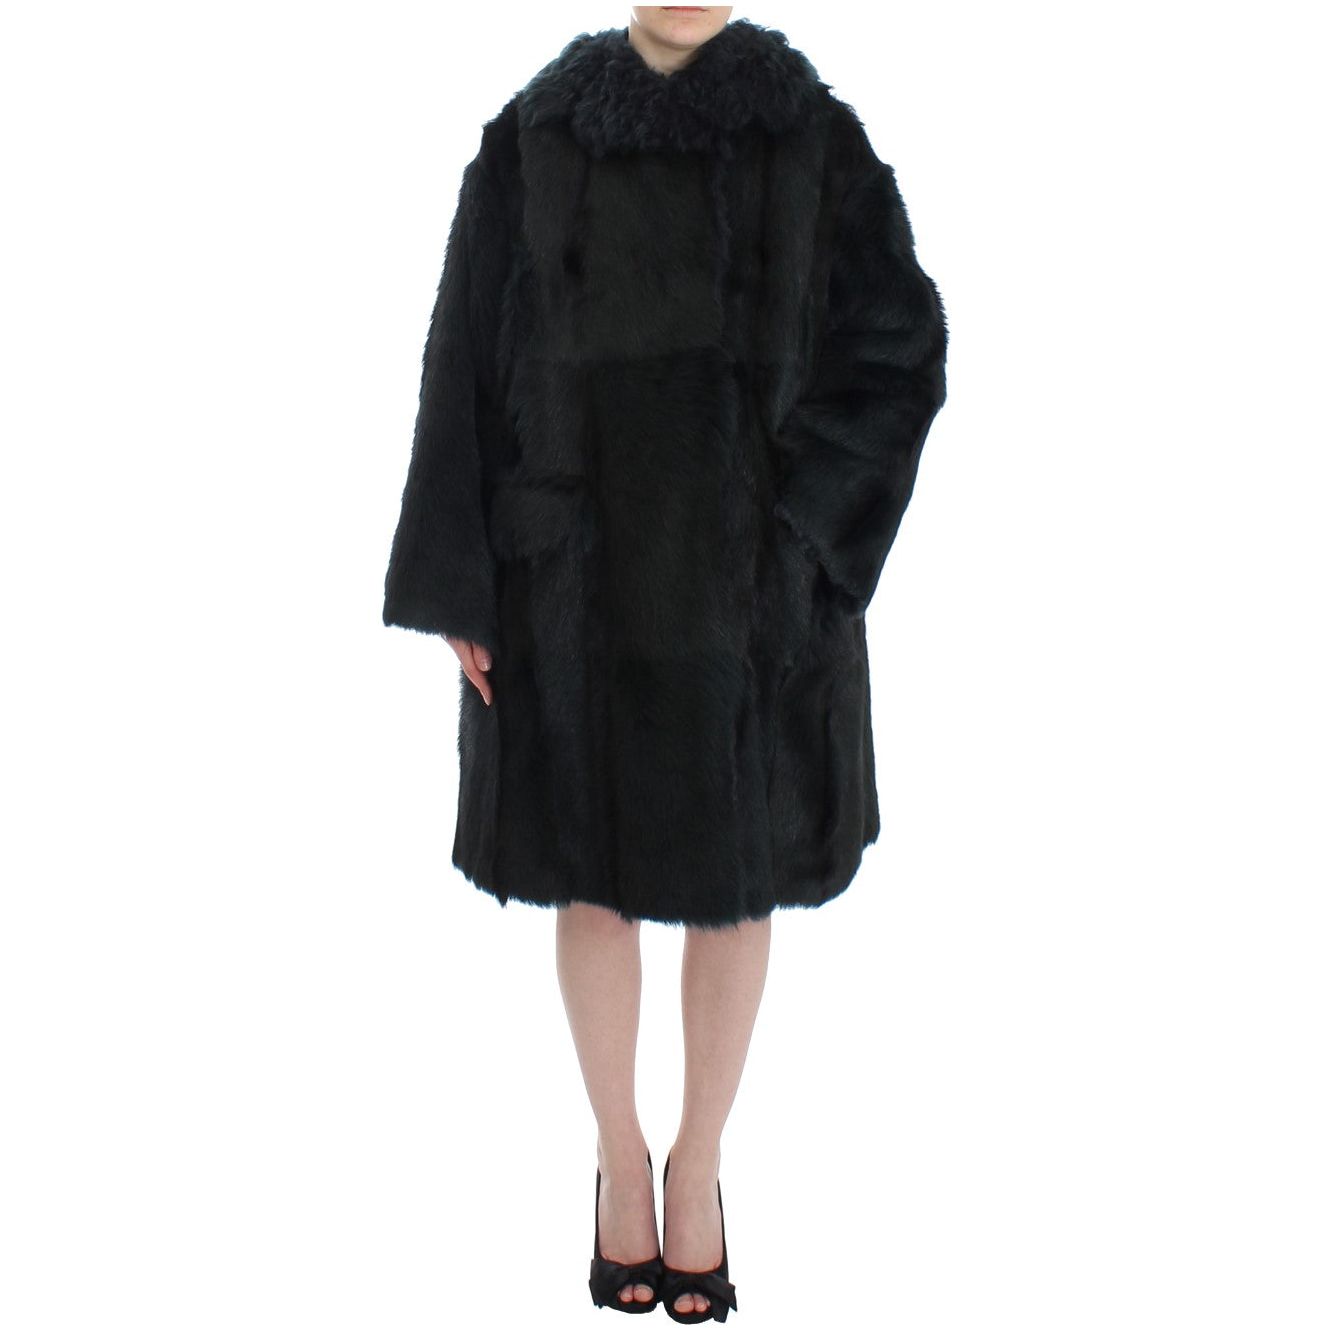 Dolce & Gabbana Exquisite Shearling Coat Jacket black-goat-fur-shearling-long-jacket-coat 62390-black-goat-fur-shearling-long-jacket-coat.jpg